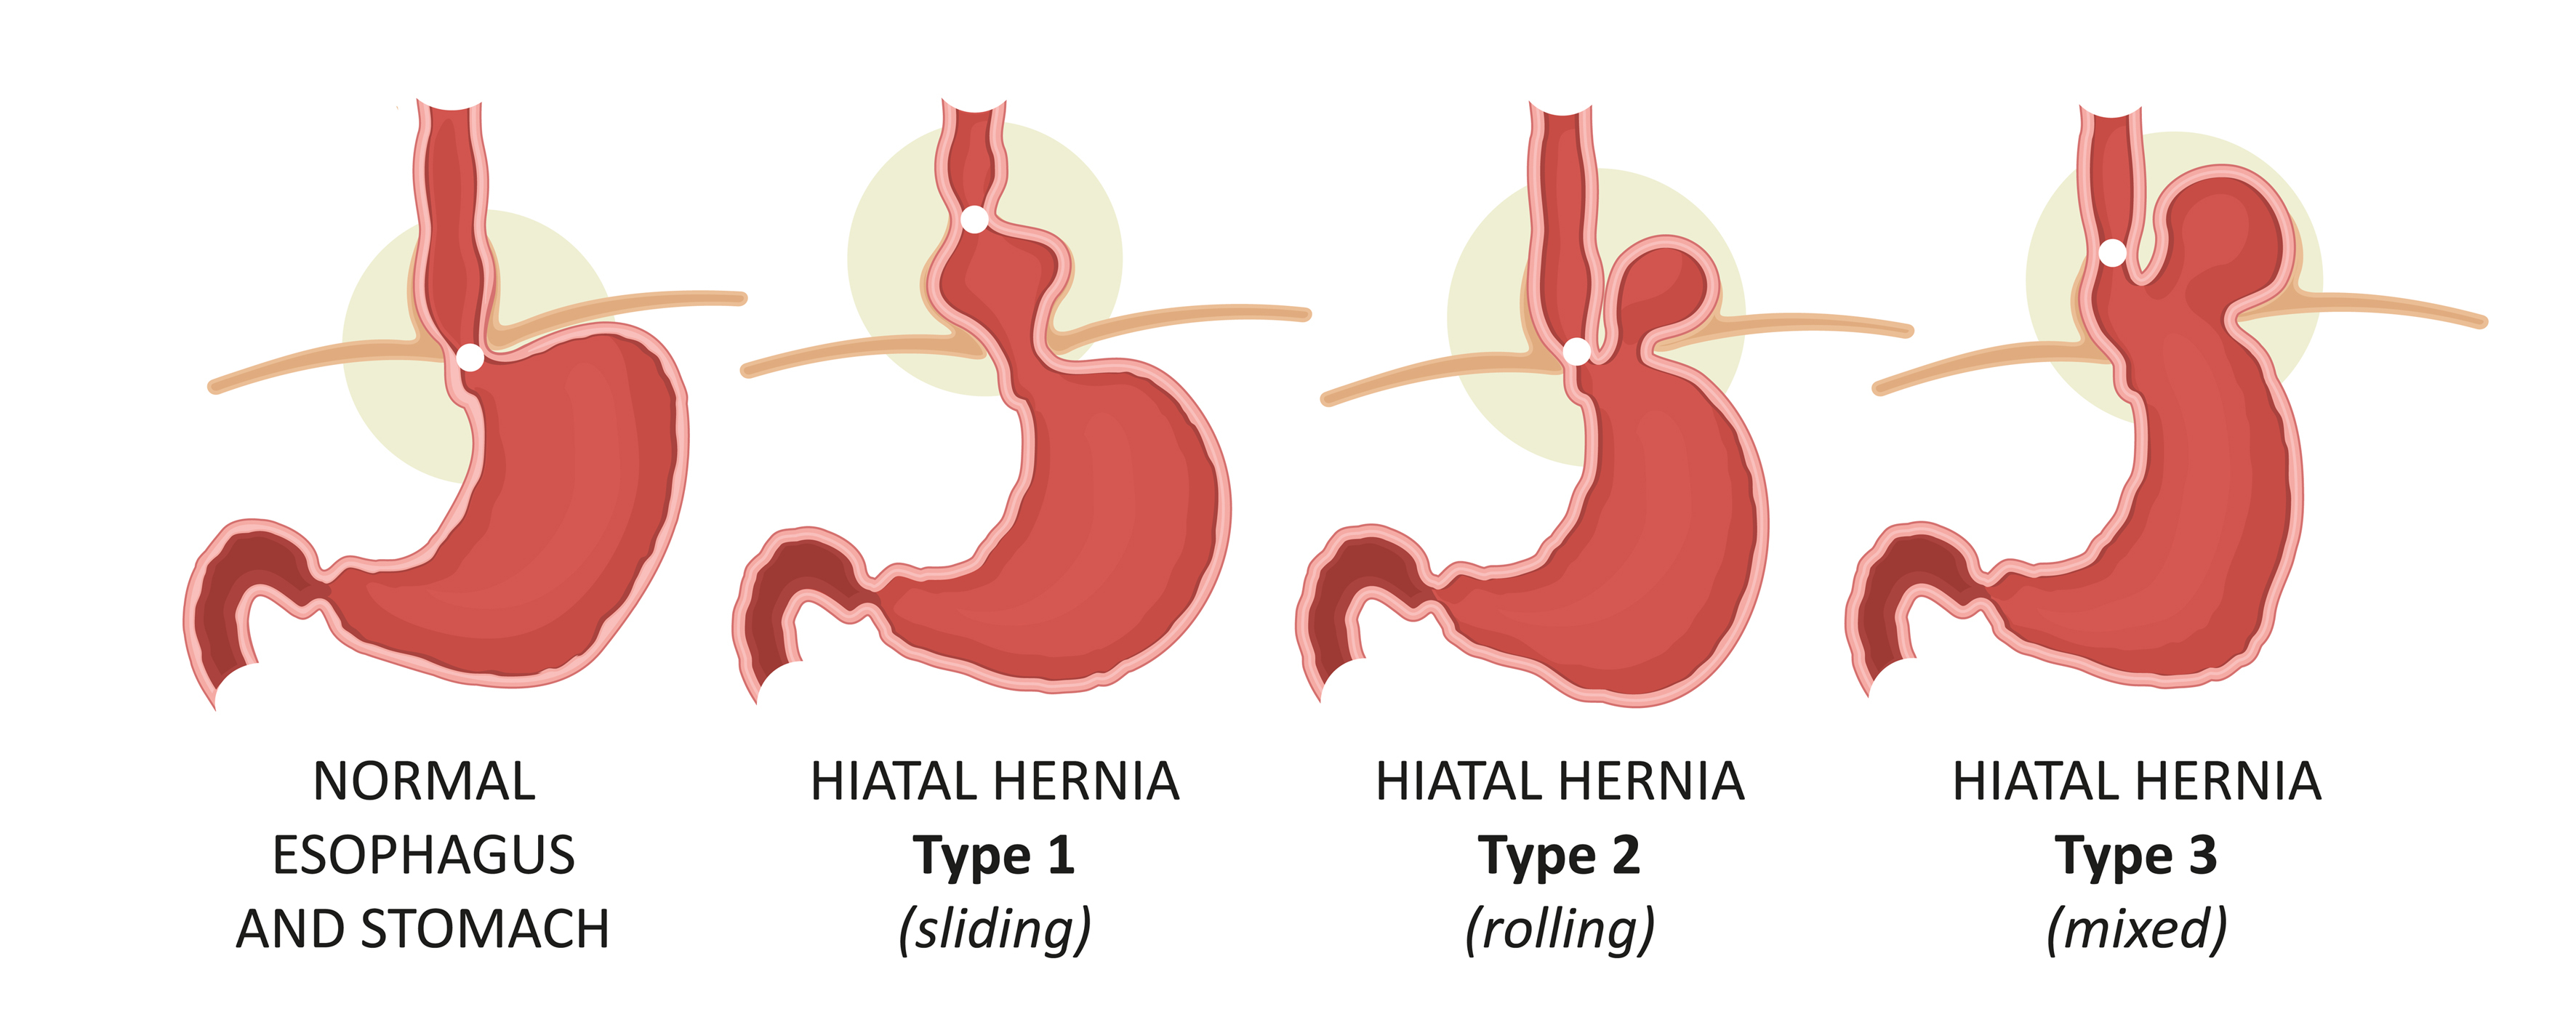 Hiatal hernia types